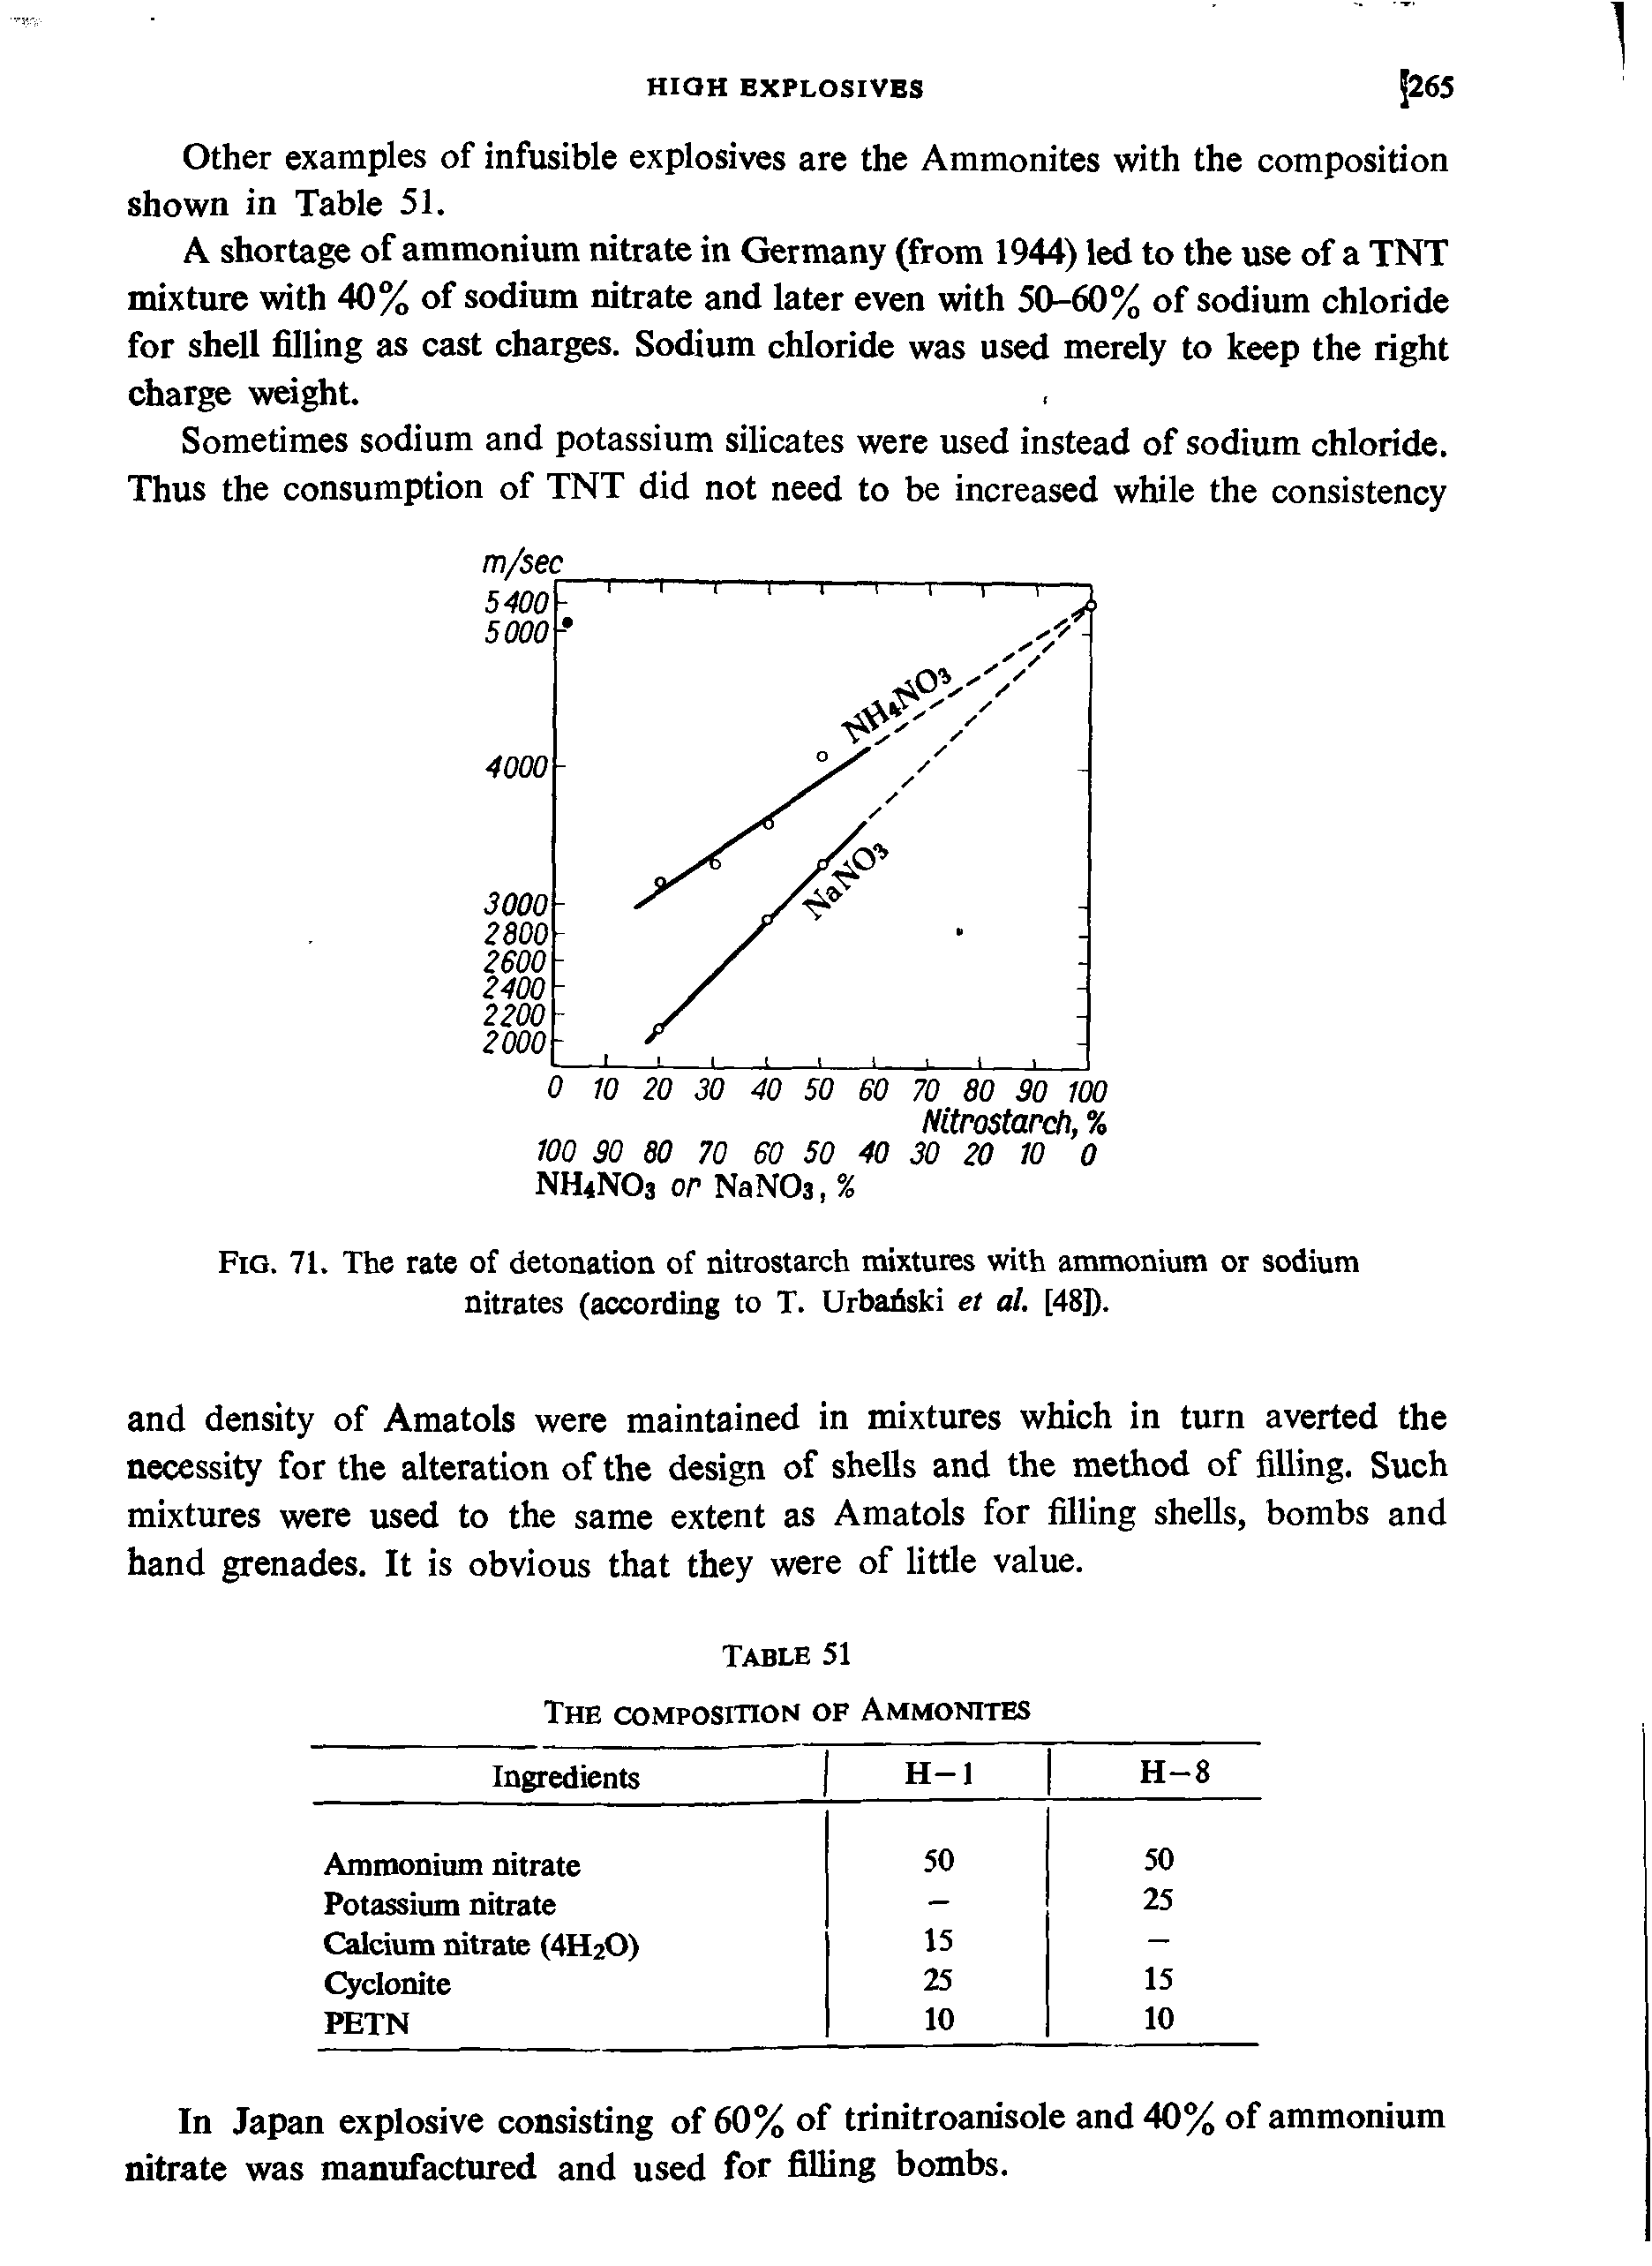 Fig. 71. The rate of detonation of nitrostarch mixtures with ammonium or sodium nitrates (according to T. Urbadski et al. [48]).